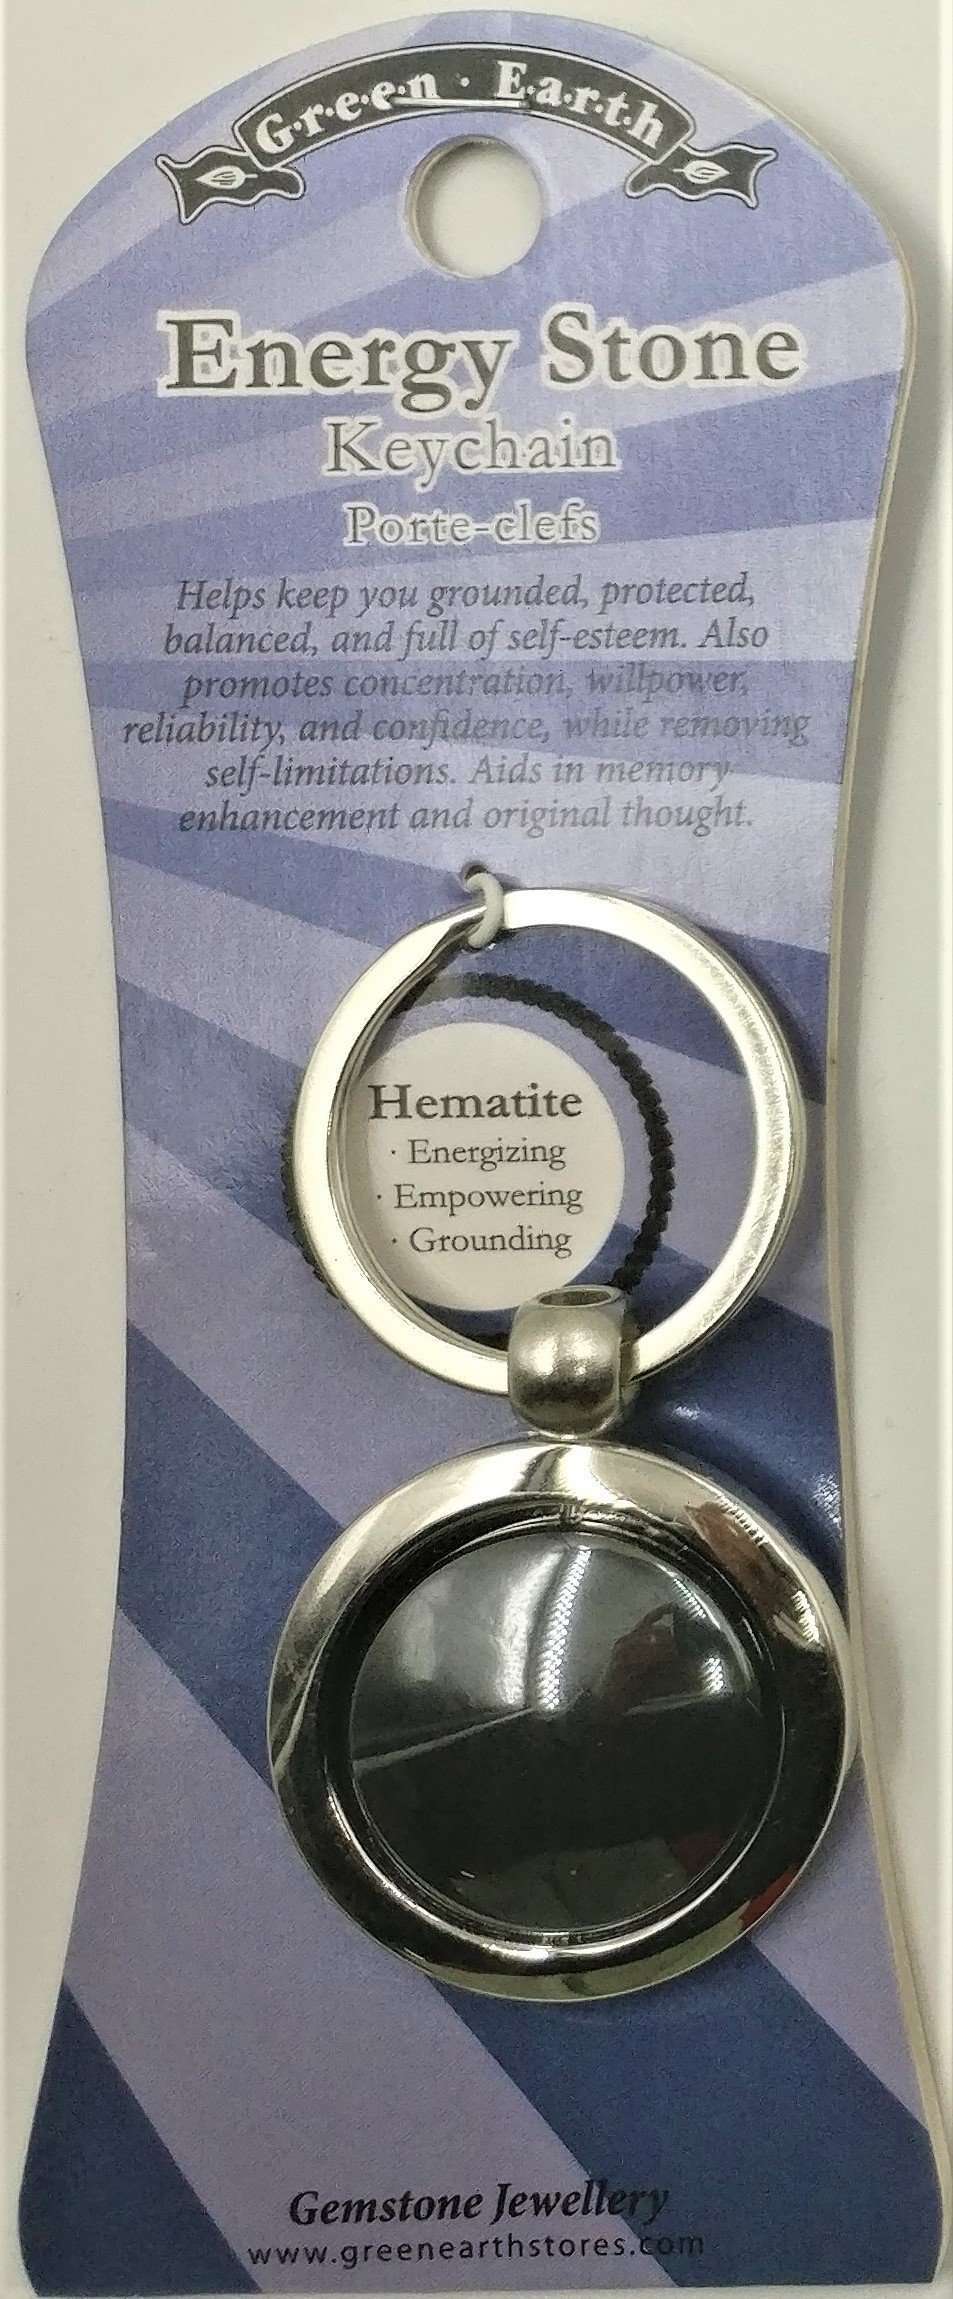 Hematite keychain - Rivendell Shop